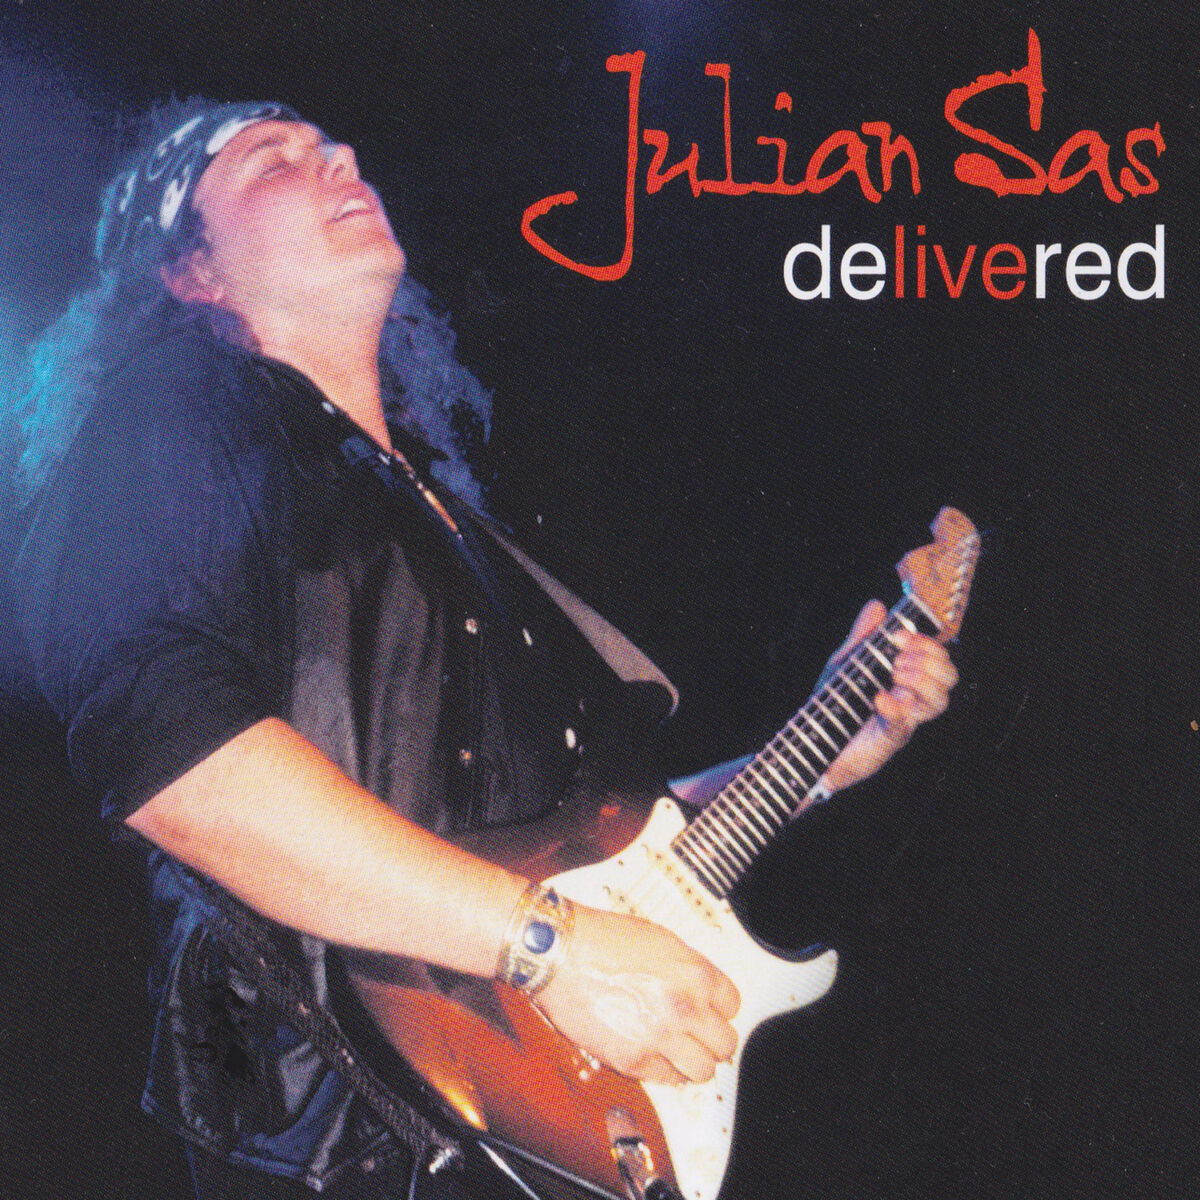 Julian Sas: albums